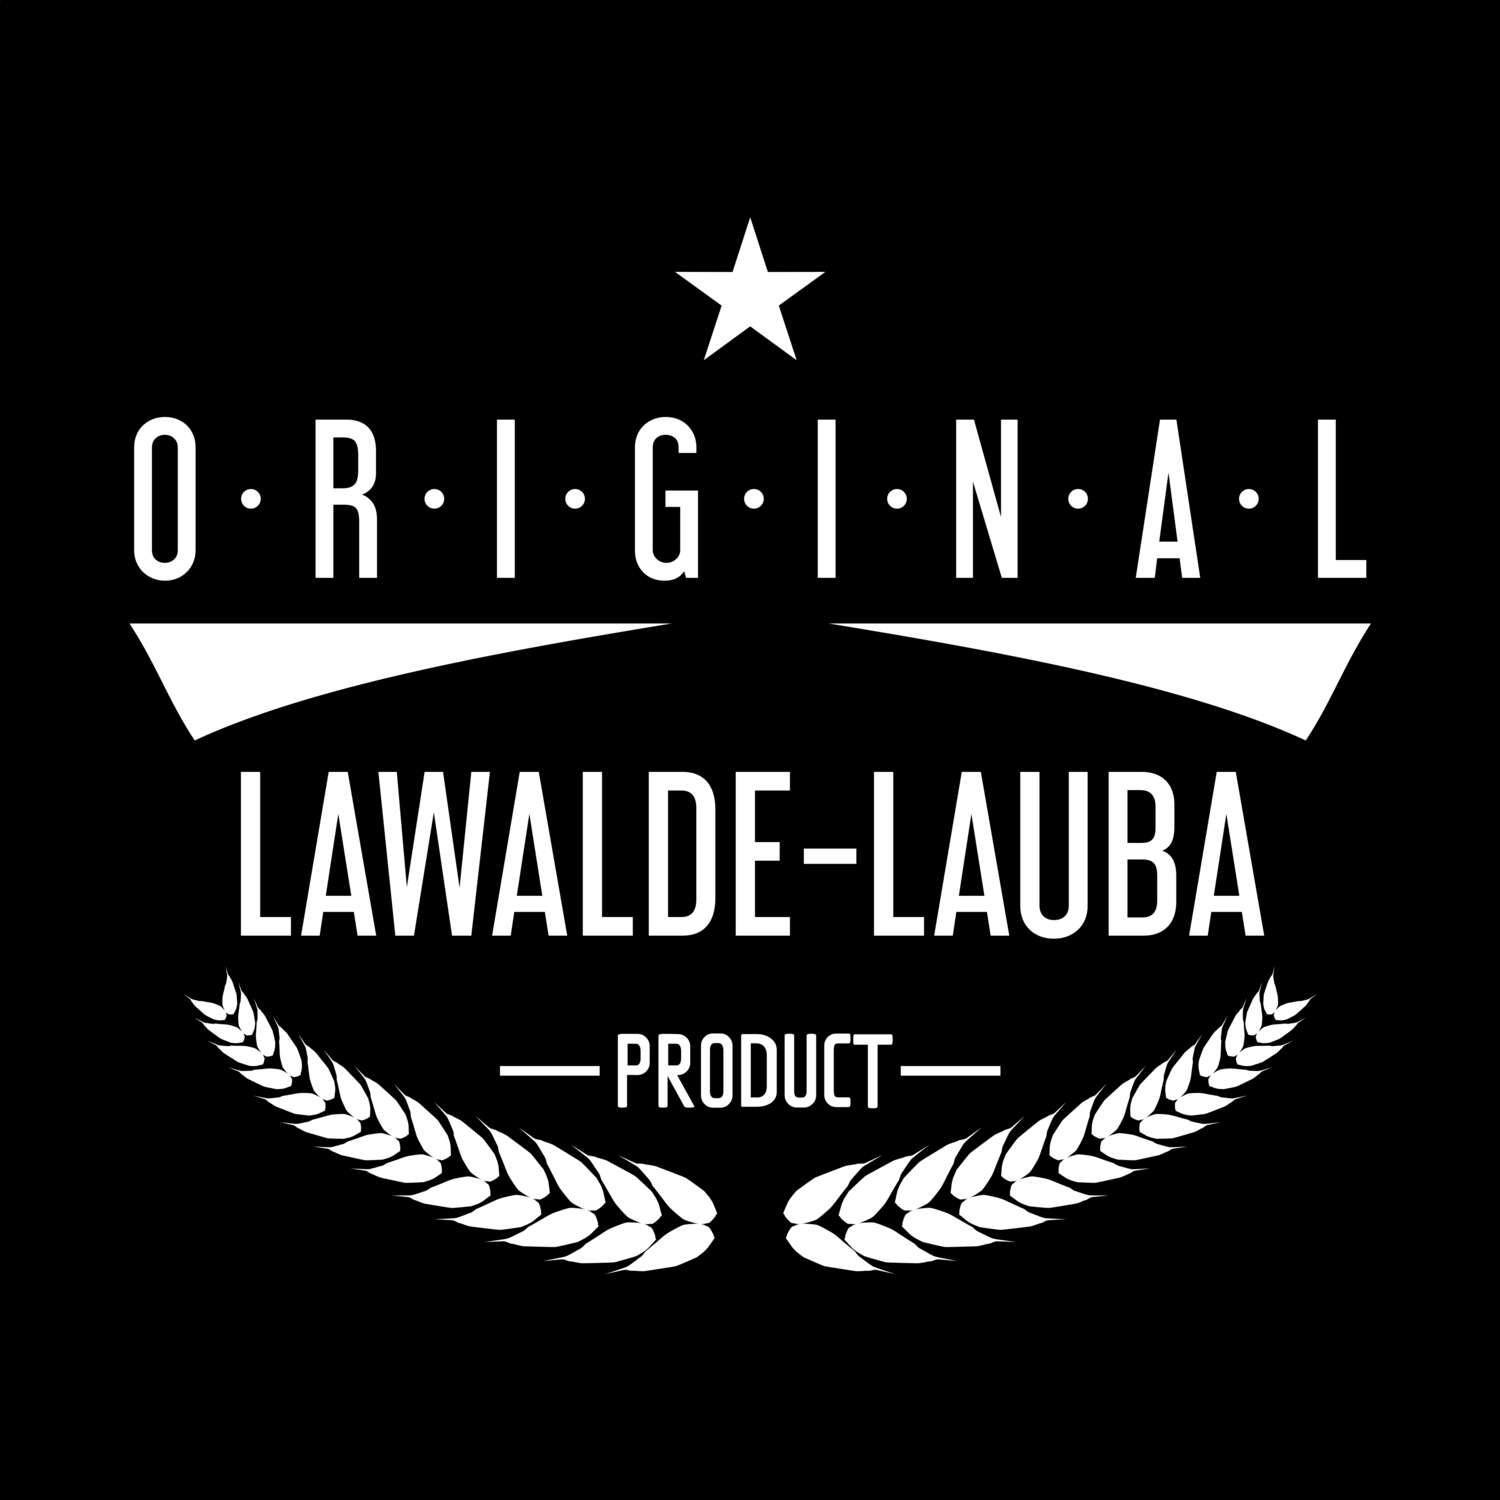 Lawalde-Lauba T-Shirt »Original Product«